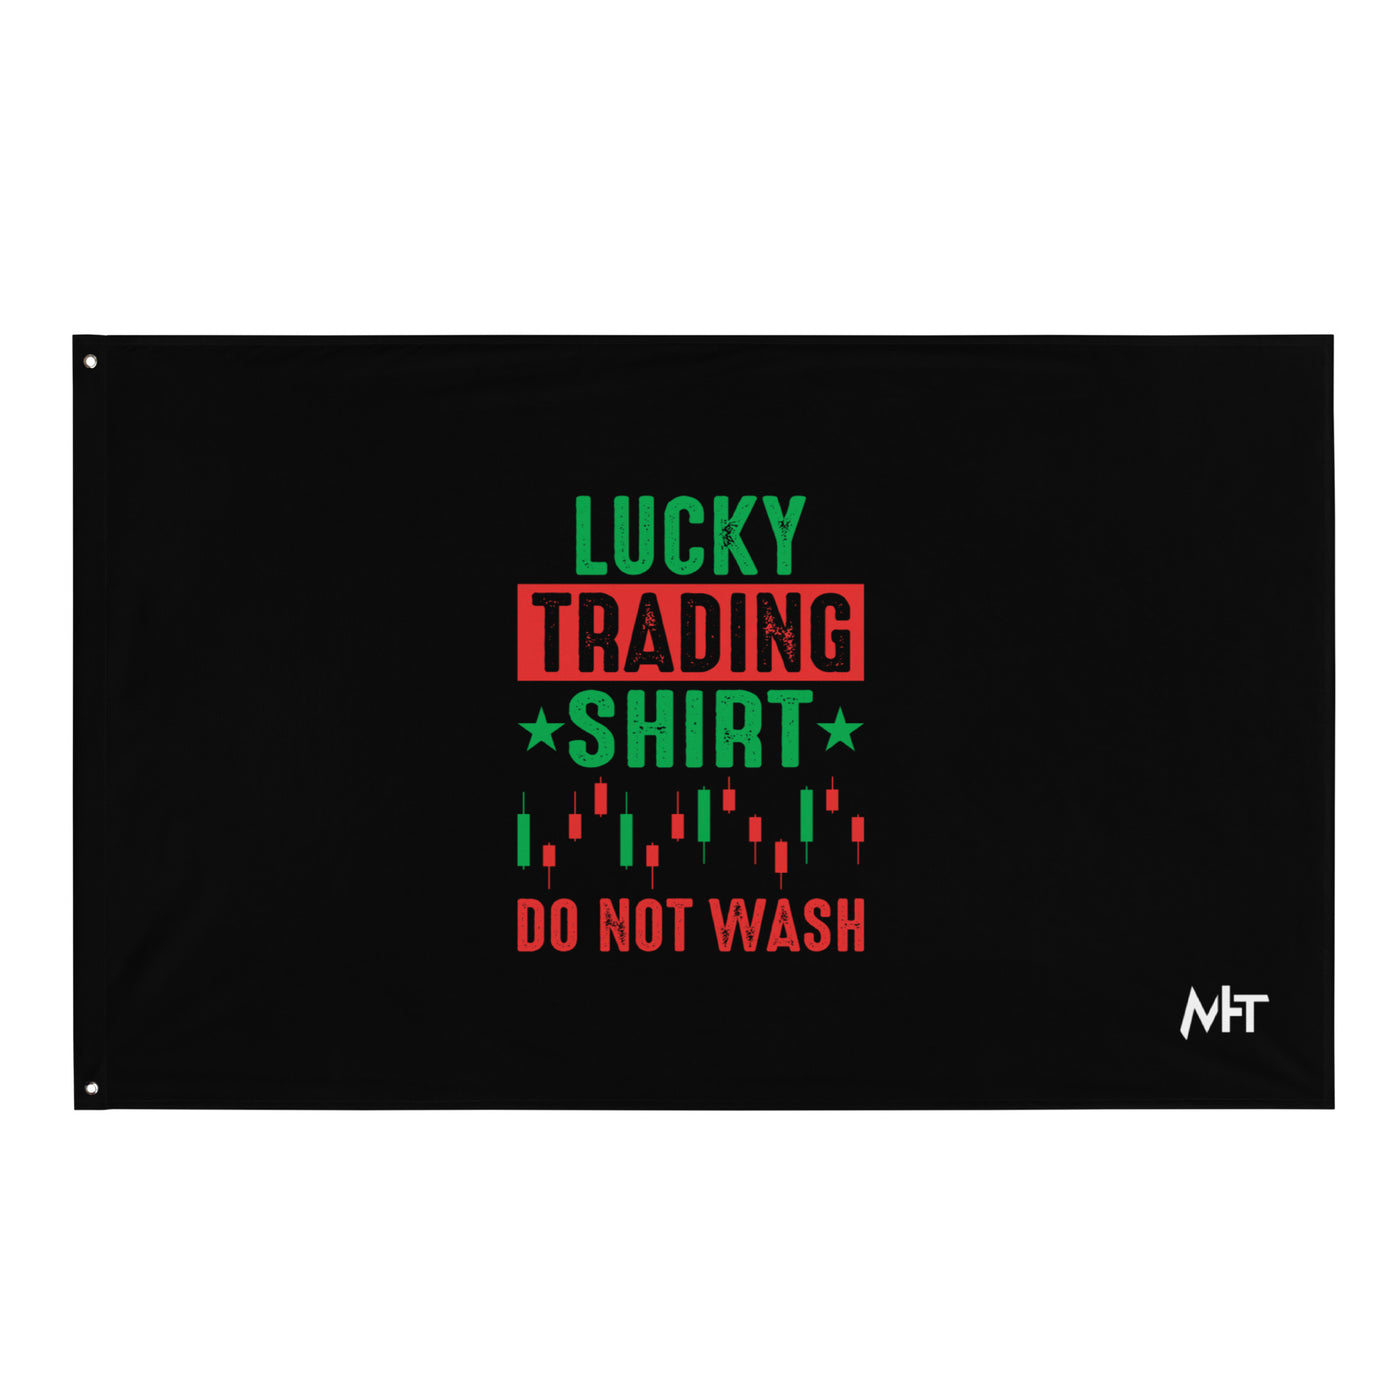 Lucky trading shirt do not Wash - Flag